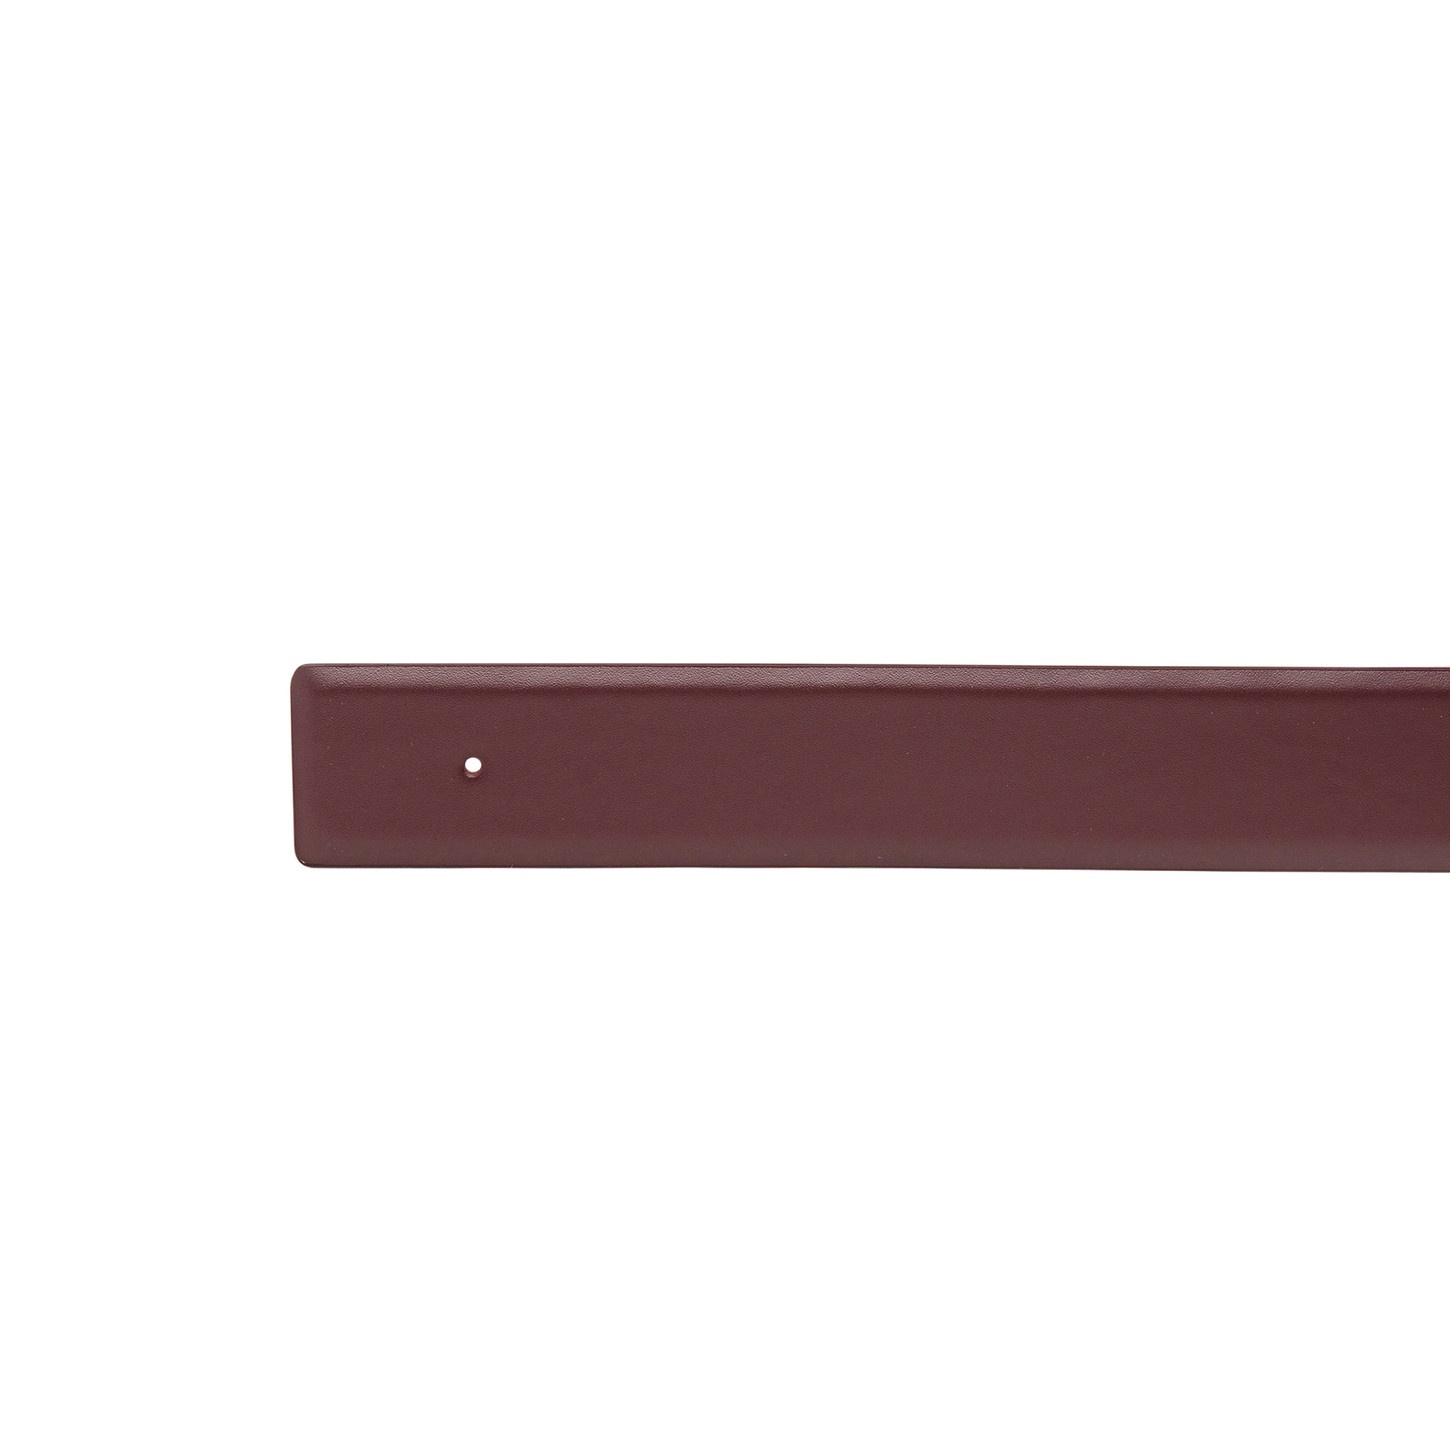 Burgundy leather belt strap - 4